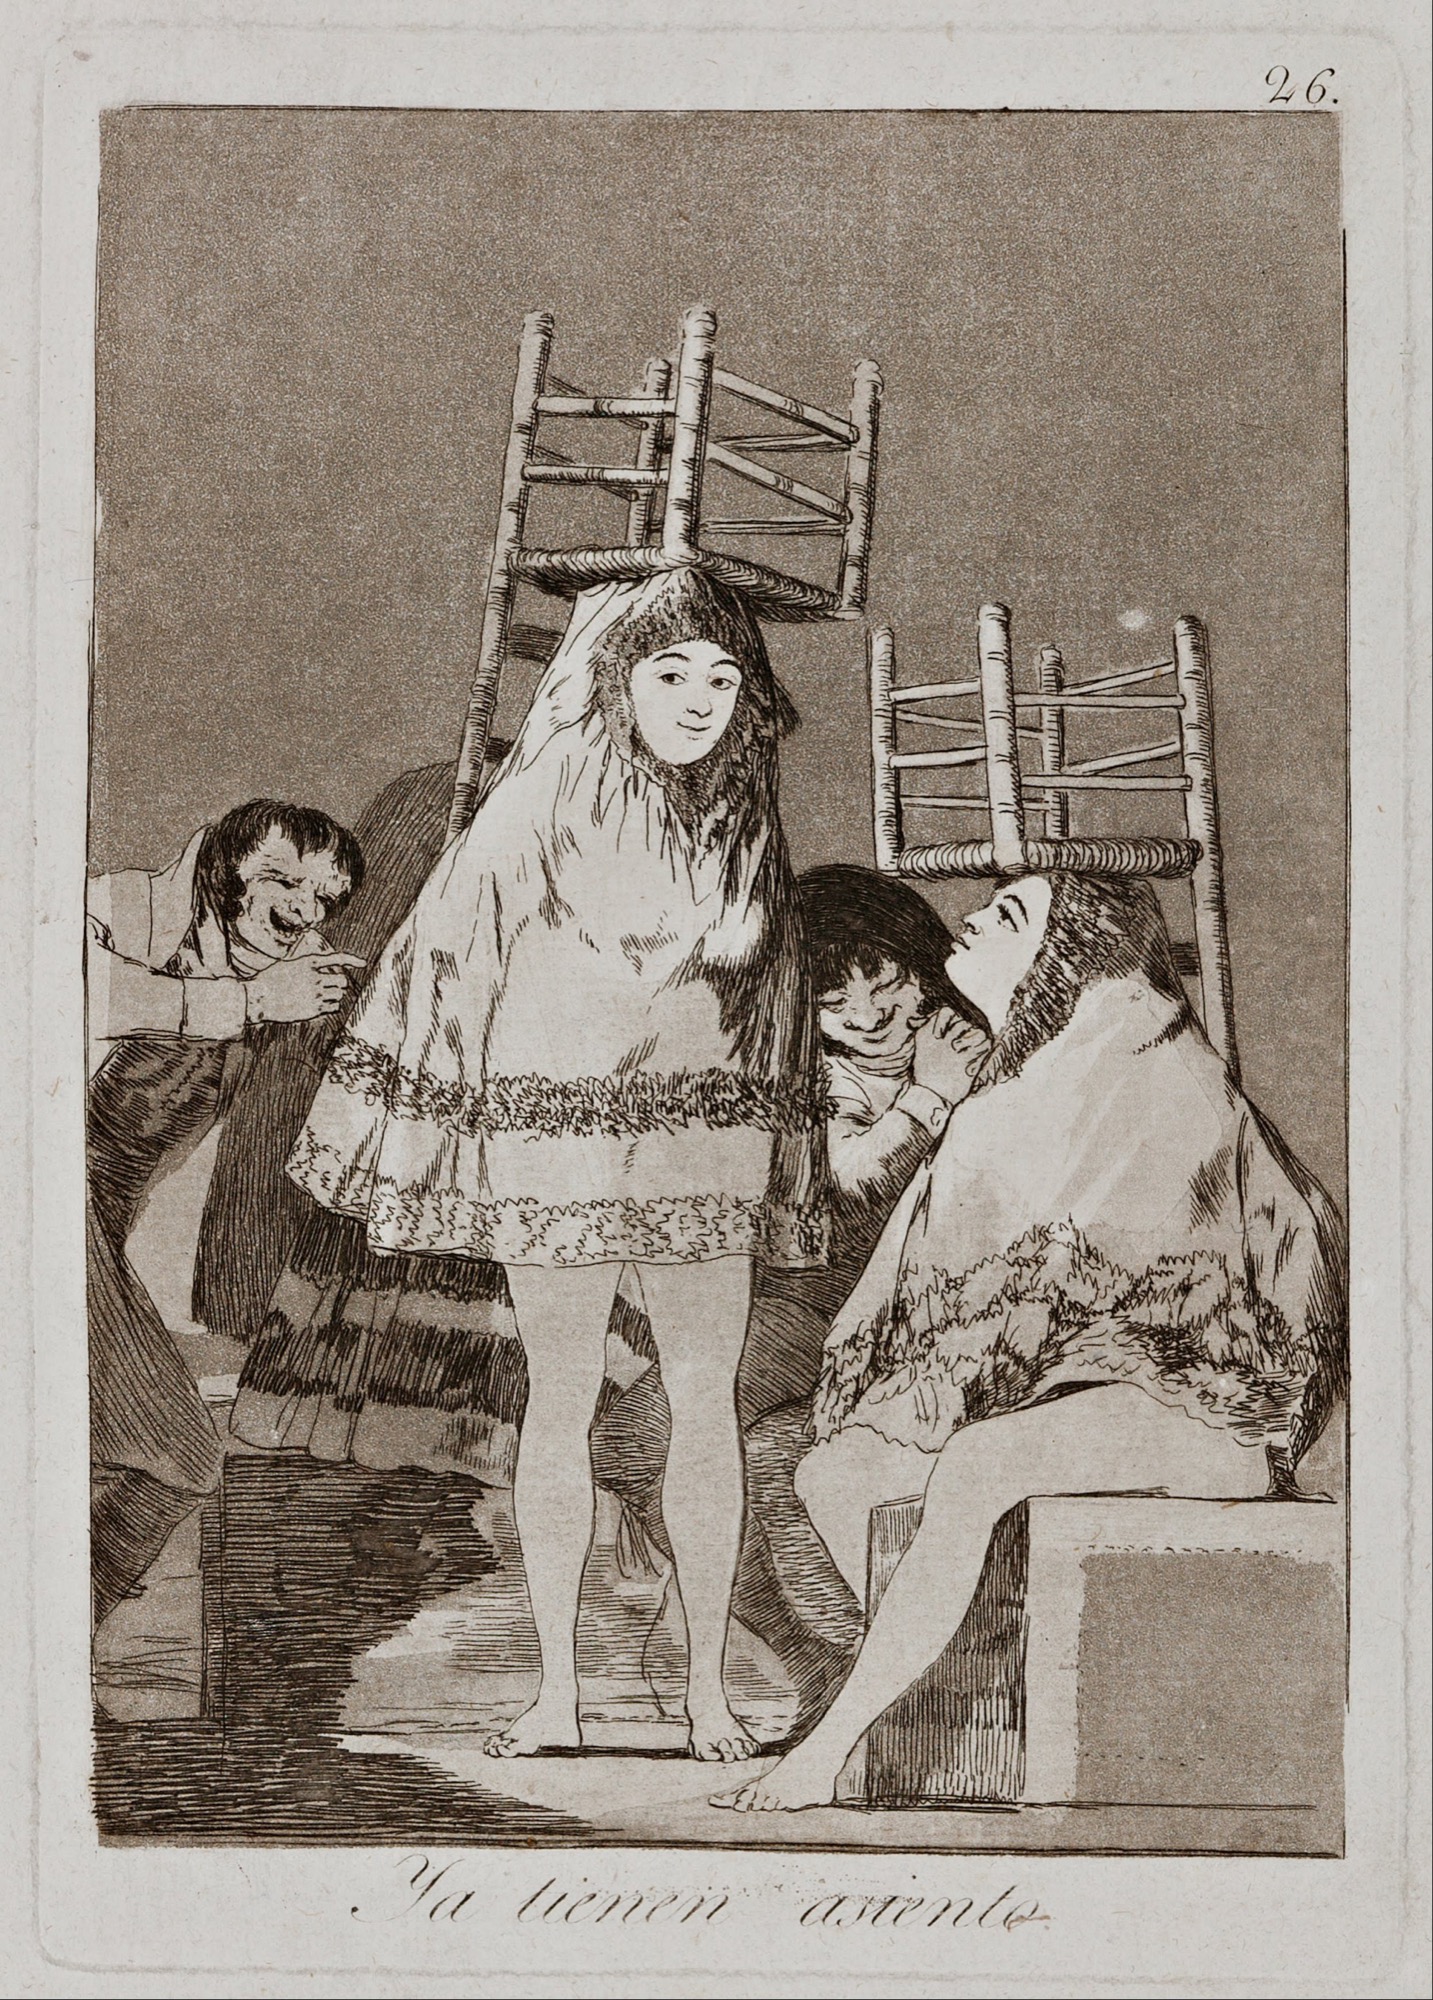 Francisco Goya y Lucientes, <em>They’ve already got a seat</em> (<em>Ya tienen asiento</em>), Plate 26 from <em>Los Caprichos</em>, (<em>The Caprices</em>) series (1797-1798), published 1799.